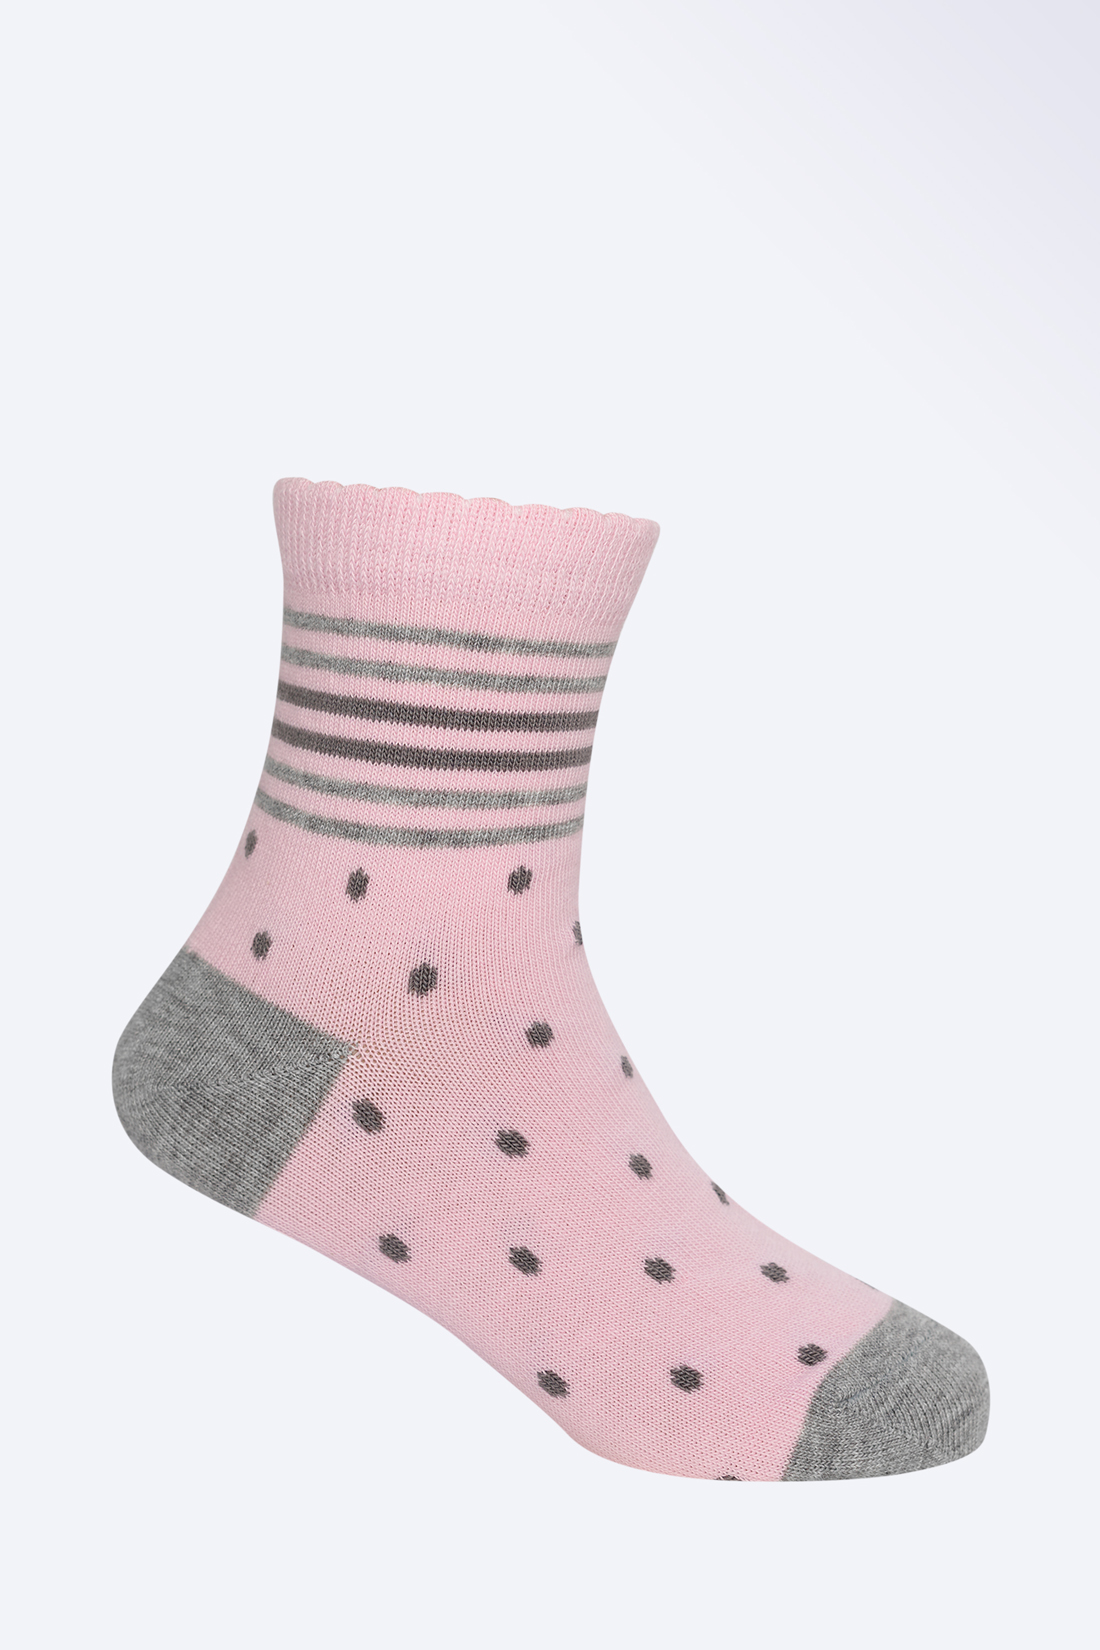 Носки для девочки (арт. baon BK399512), размер 29/31, цвет розовый Носки для девочки (арт. baon BK399512) - фото 1